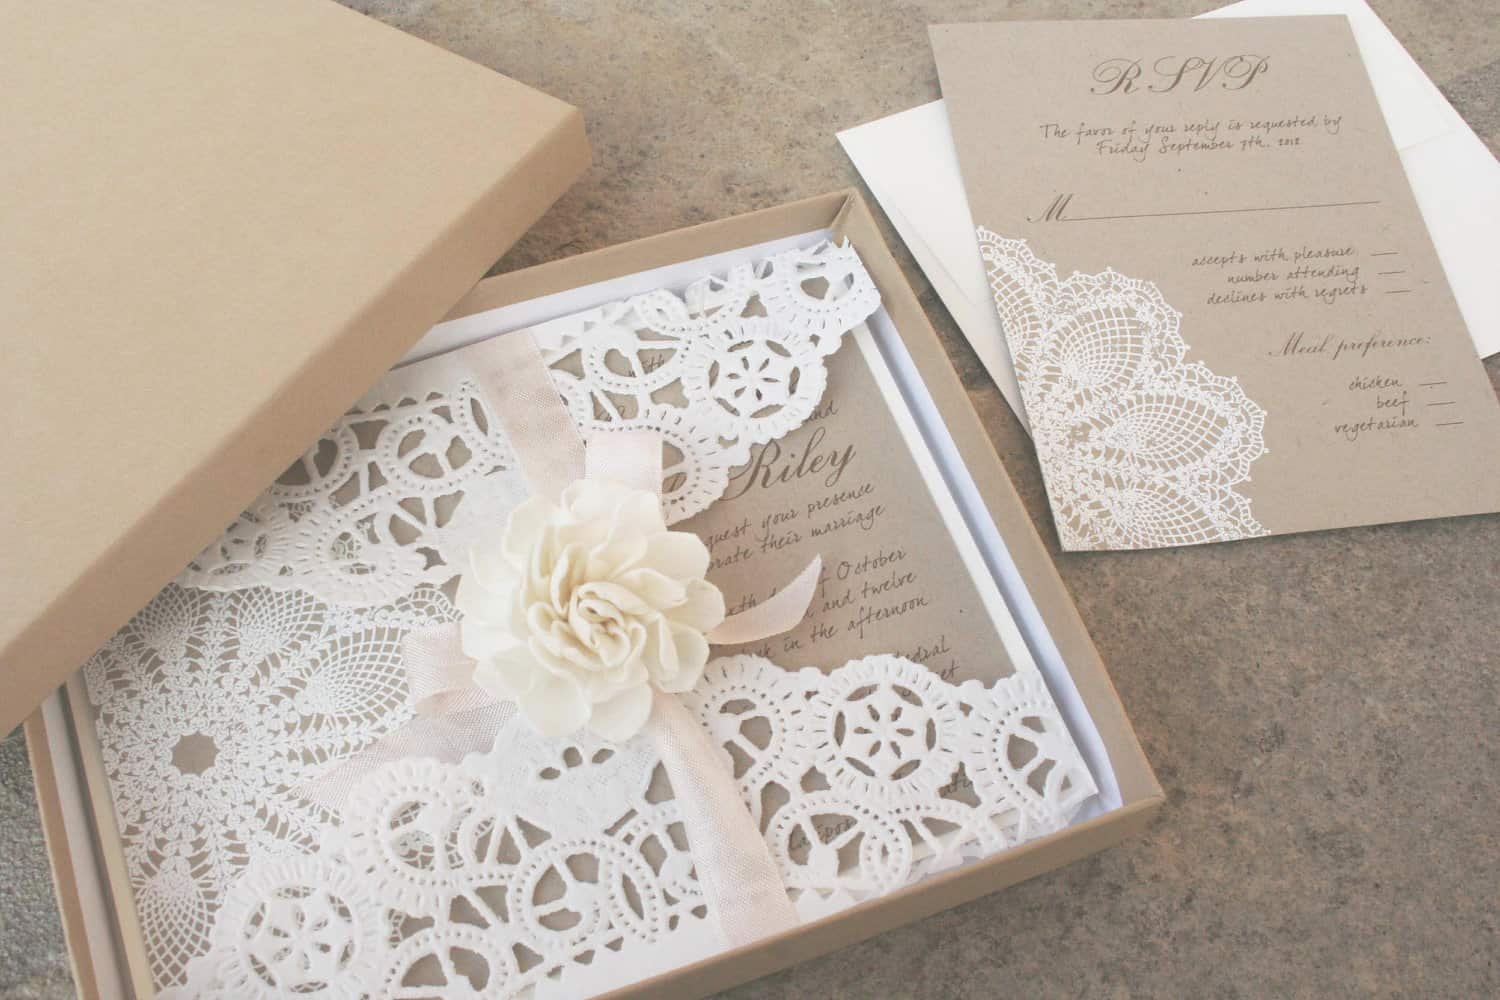 http://sndclsh.com/wedding/vintage-lace-wedding-invitations